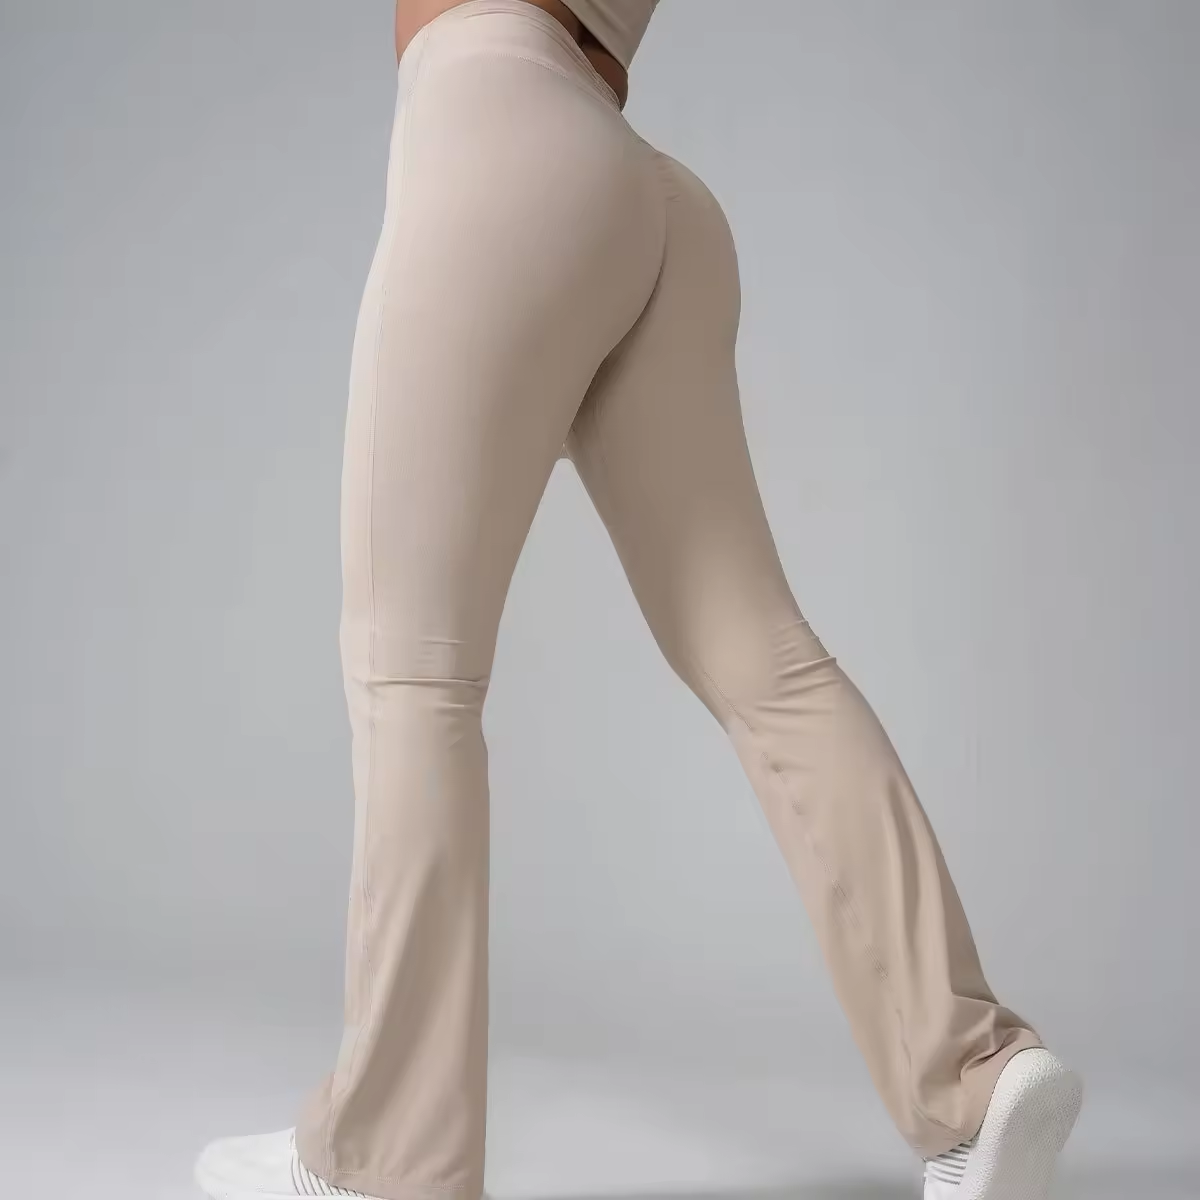 Zero Sensory Women's High Waist Fitness Pants